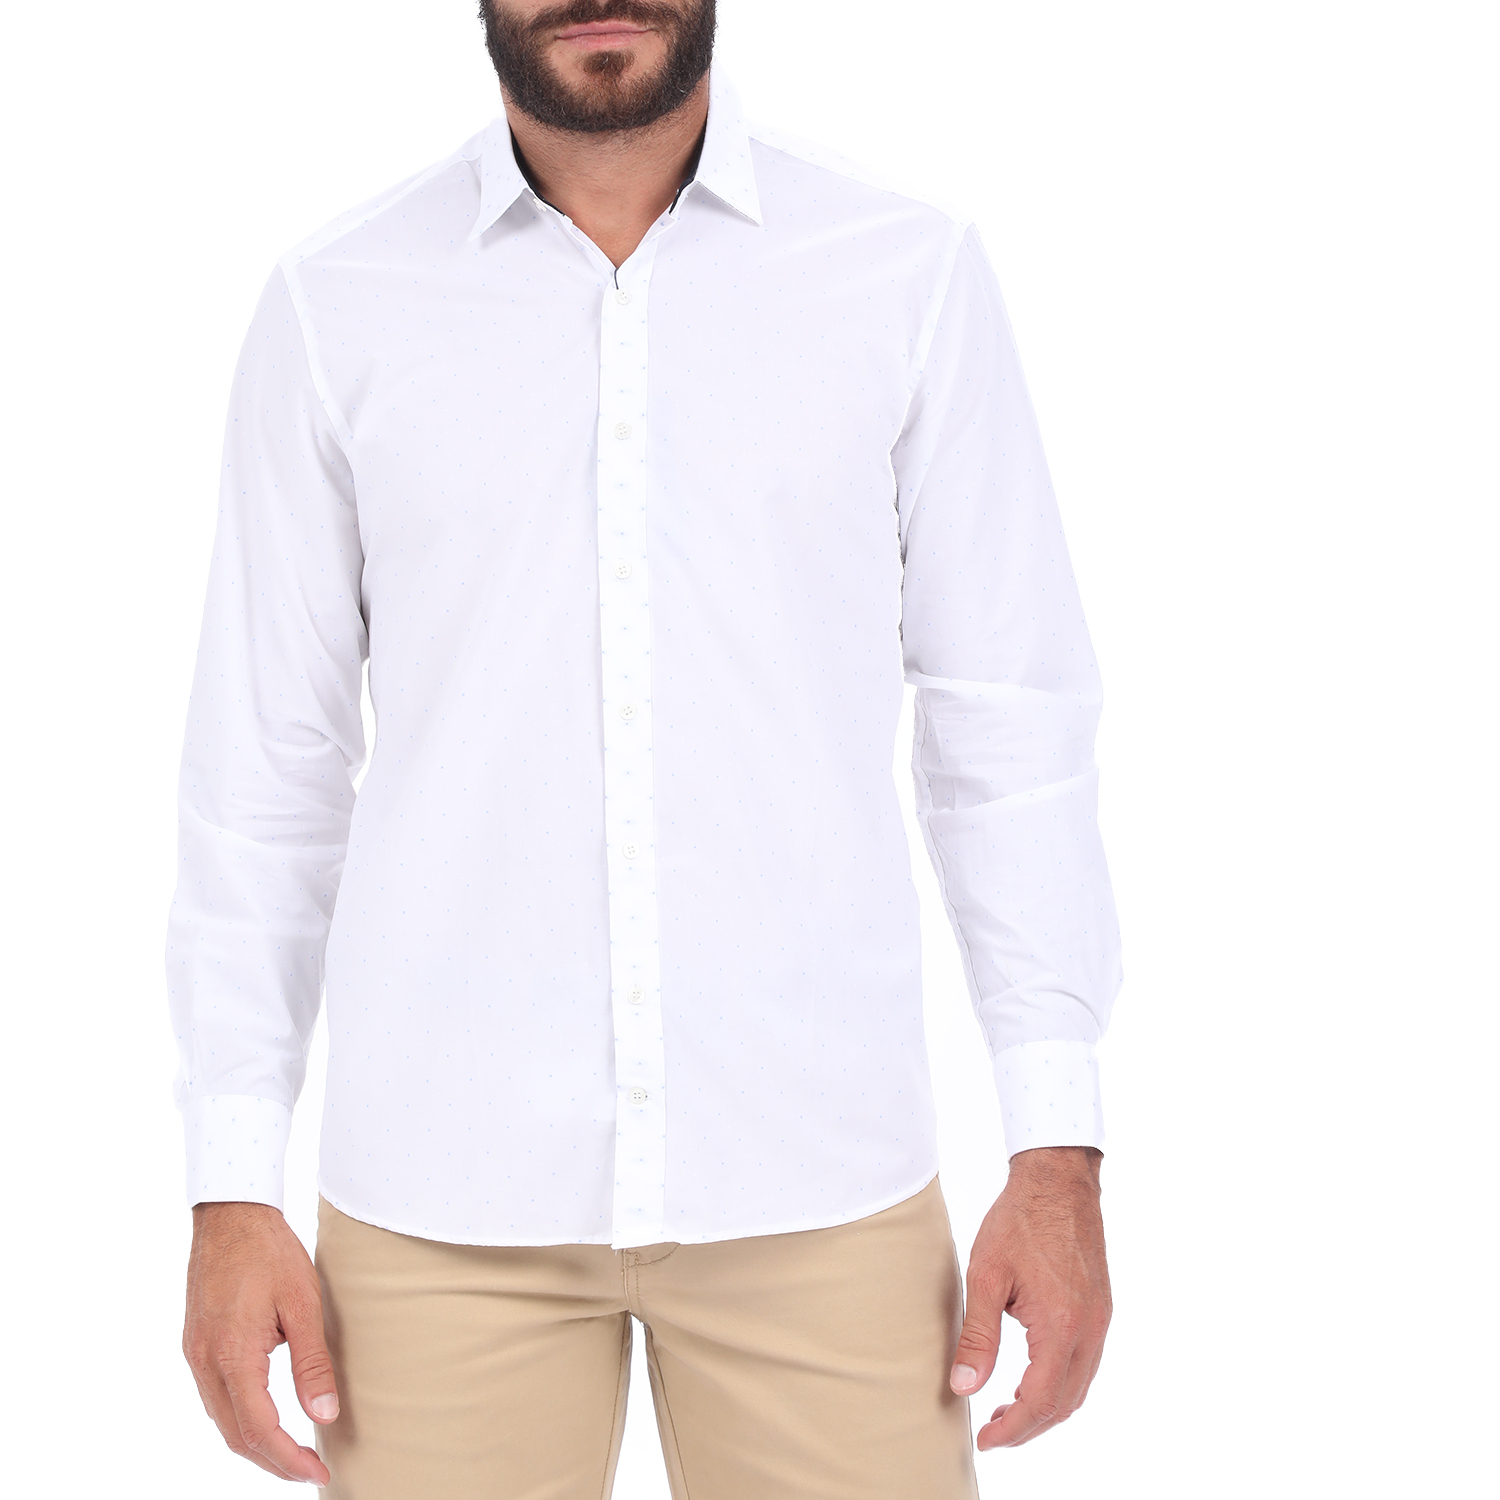 HAMPTONS - Ανδρικό πουκάμισο HAMPTONS MICRODESIGN λευκό